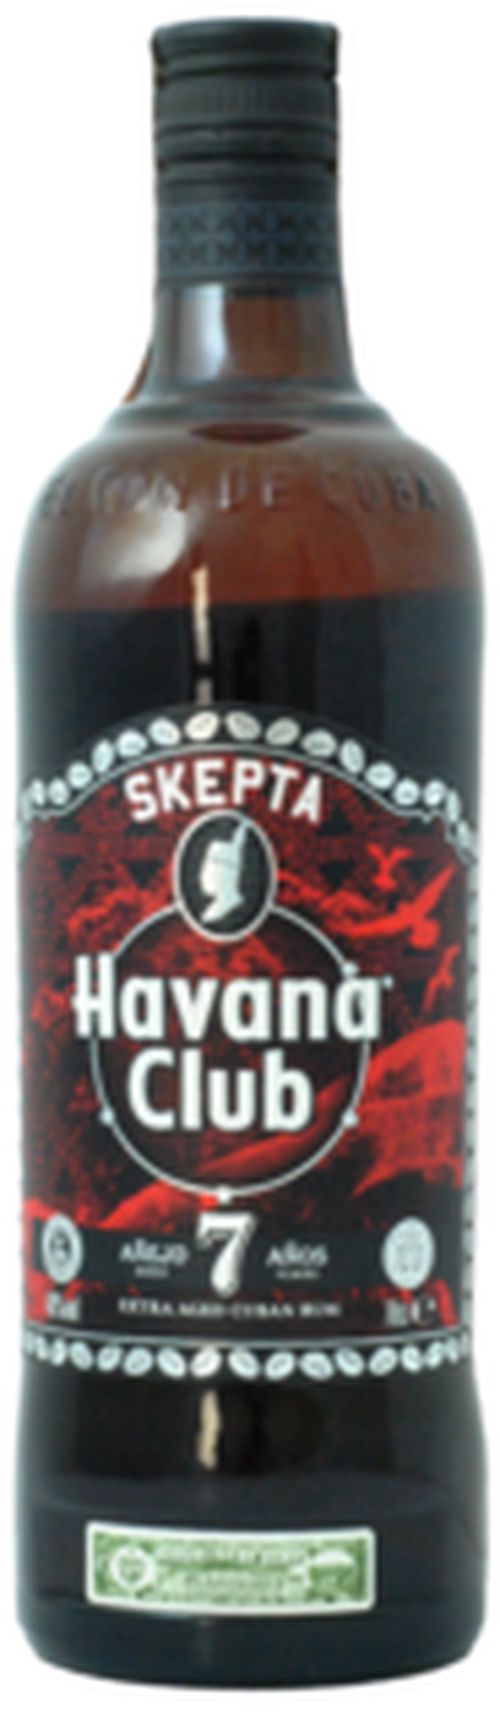 Havana Club 7YO Skepta Limited Edition 40% 0.7L